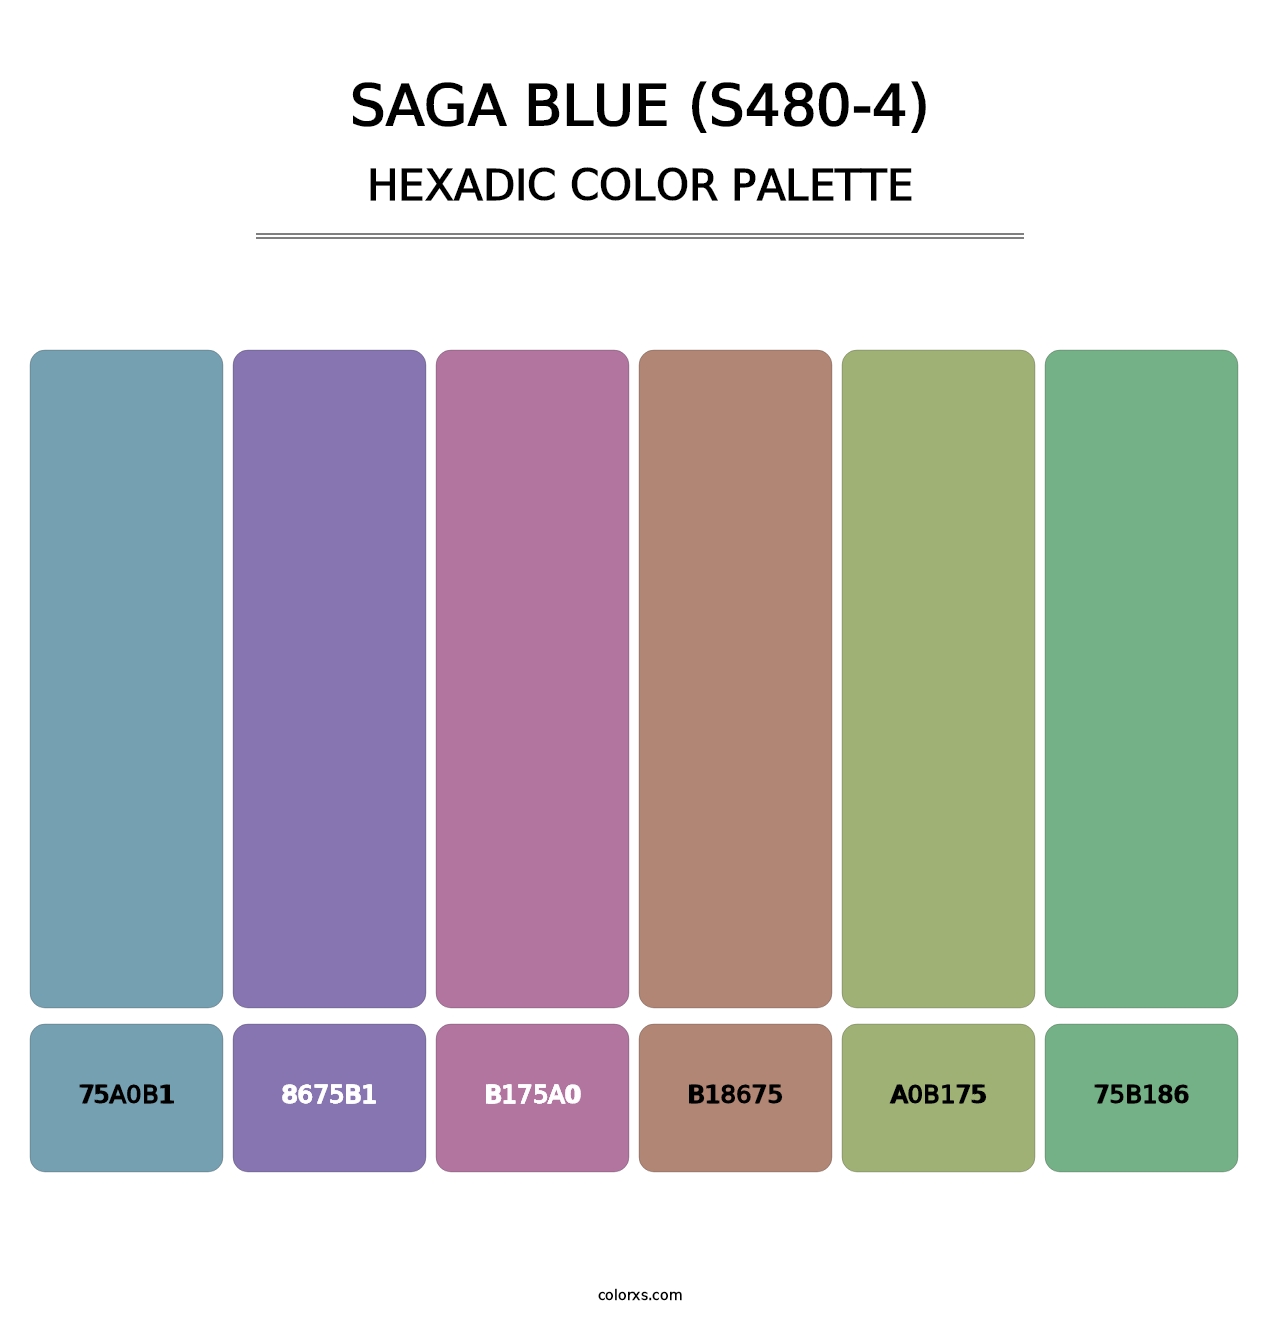 Saga Blue (S480-4) - Hexadic Color Palette